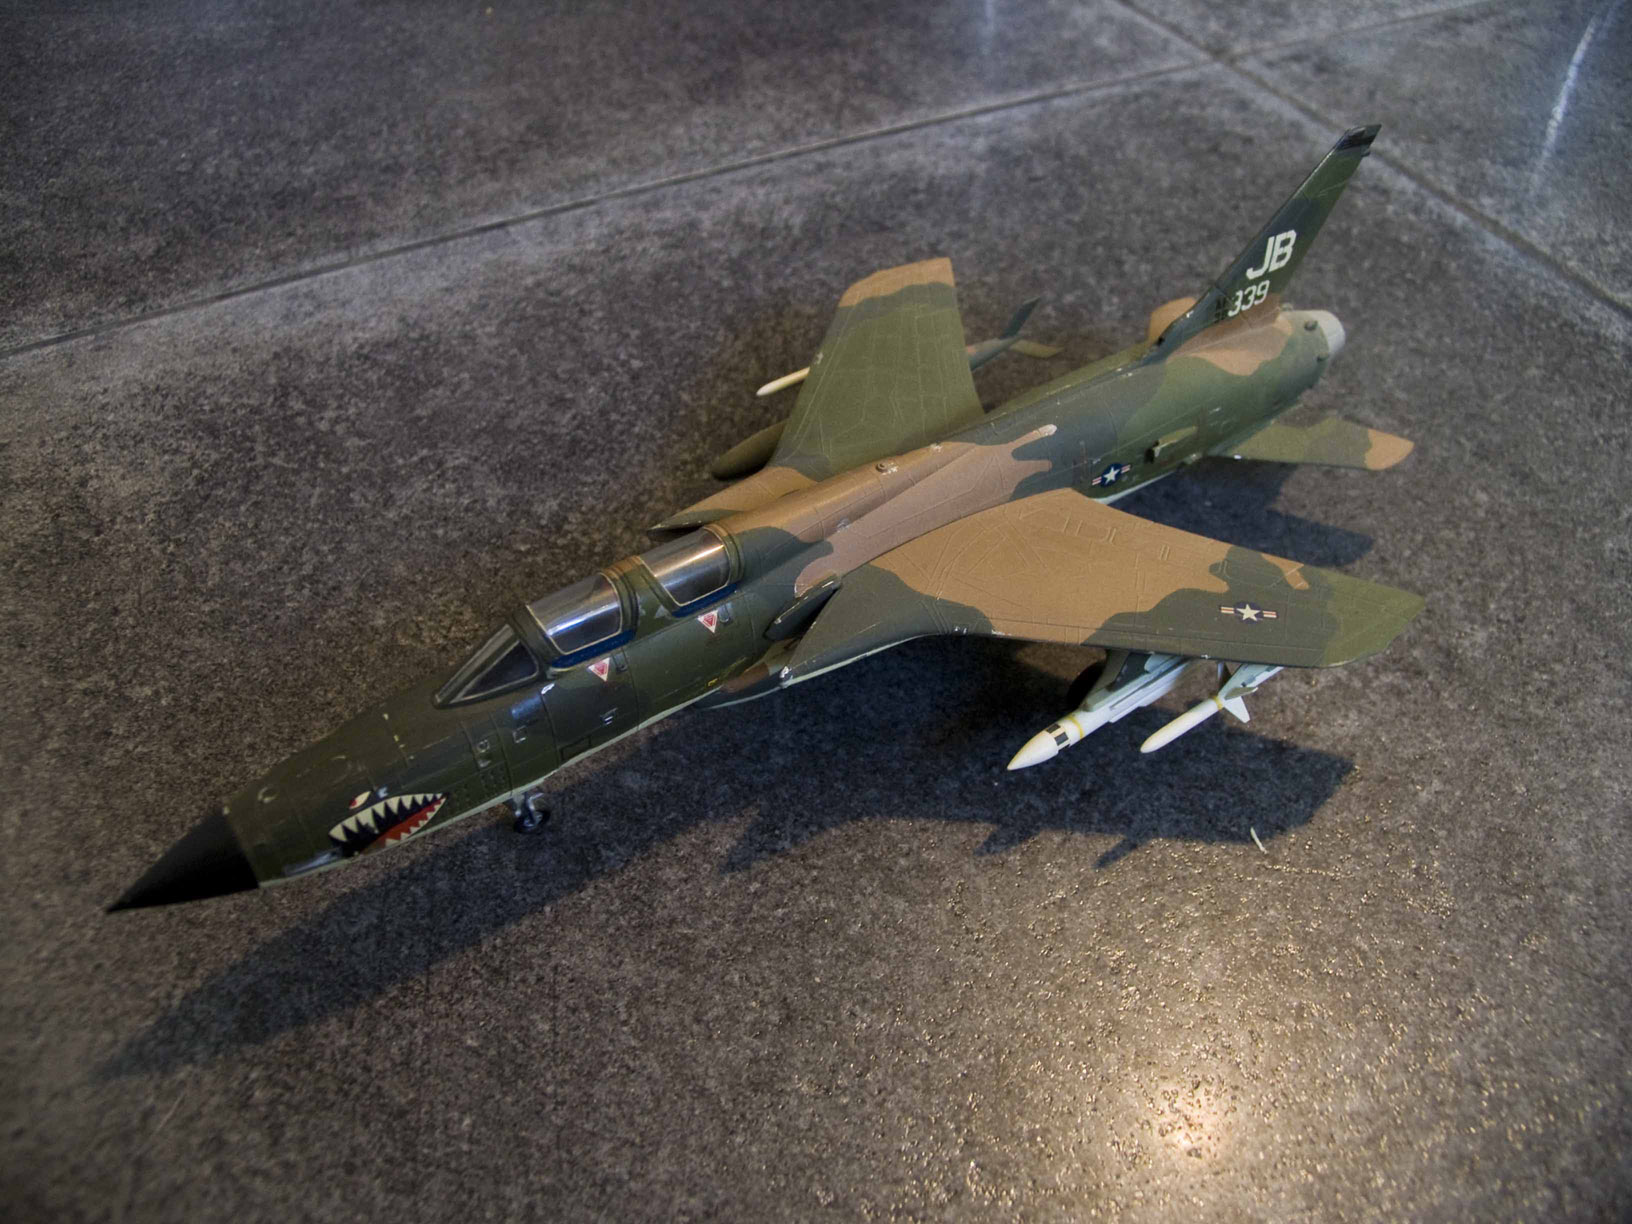 [AIRFIX] Republic F-105 G Thunderchief "Wild Weasel" Vietnam 1973 - 1/72 100201102751972875359470